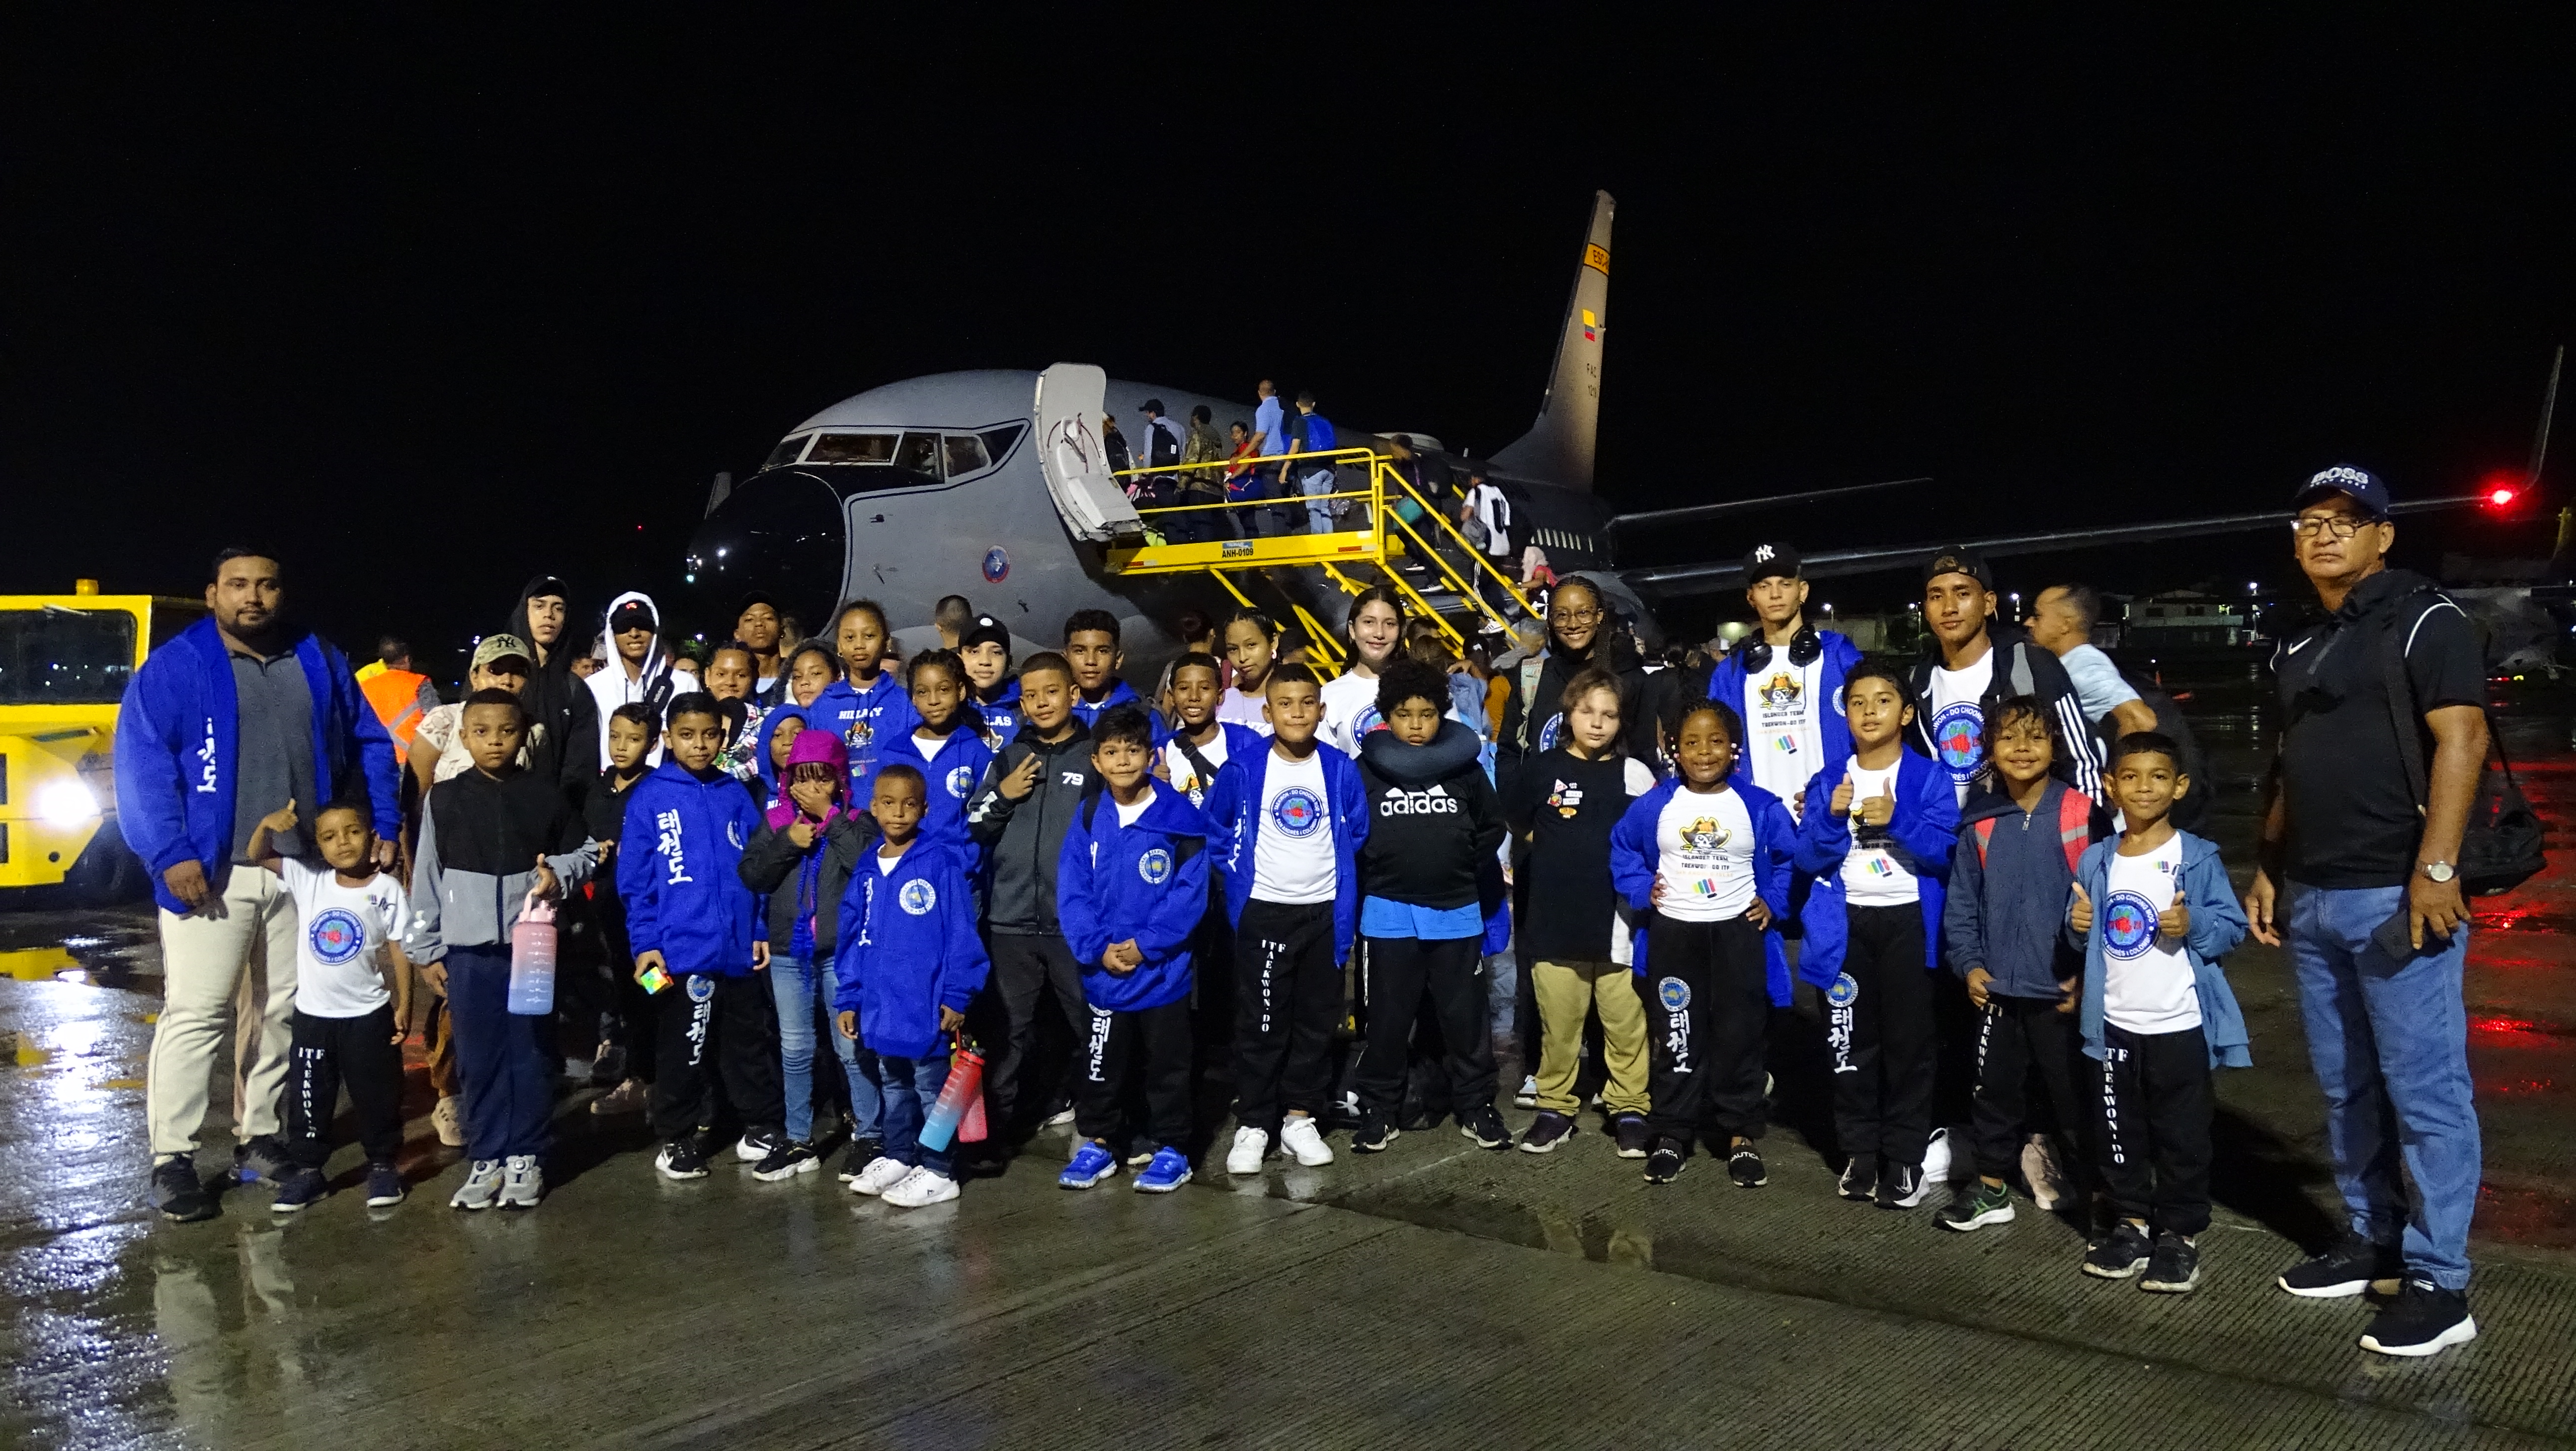 Niños taekwondistas de San Andrés fueron beneficiados con vuelo de apoyo hacia Bogotá